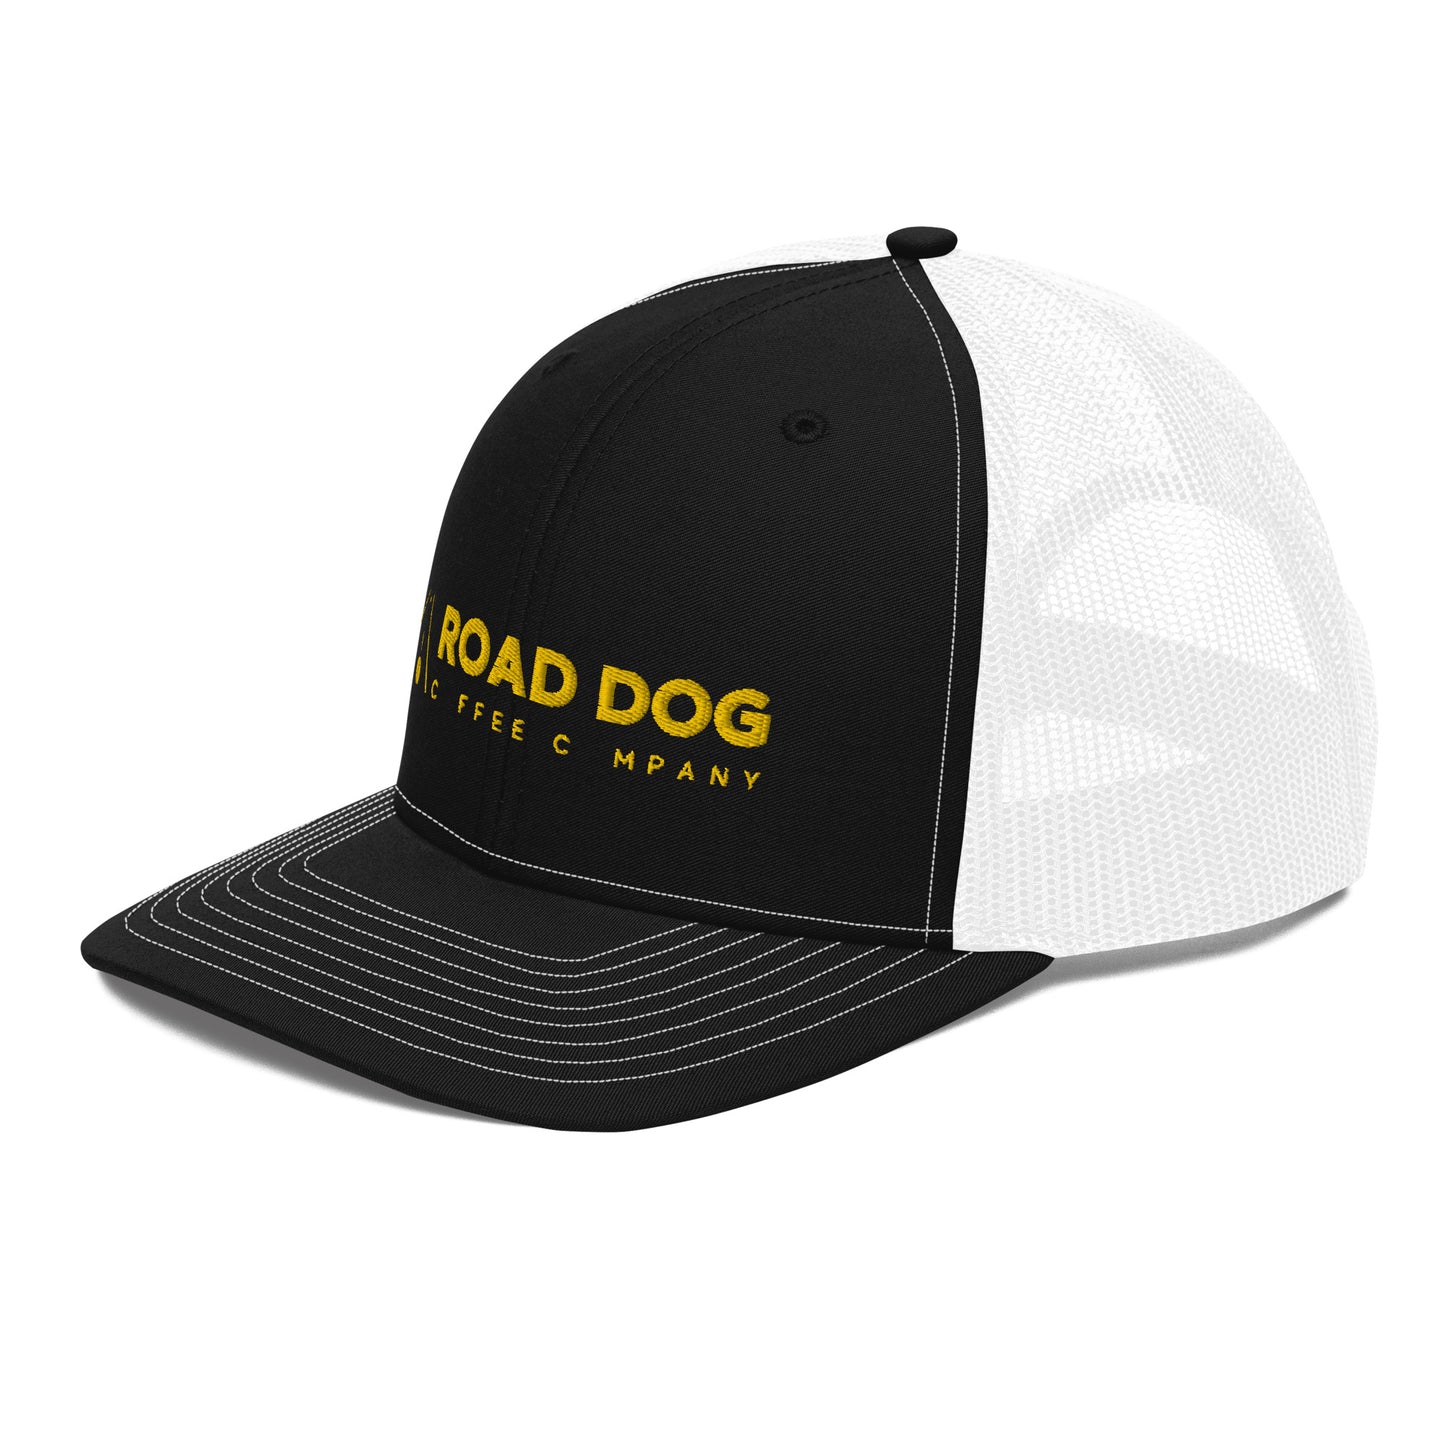 RICHARDSON 112 ROAD DOG TRUCKER CAP